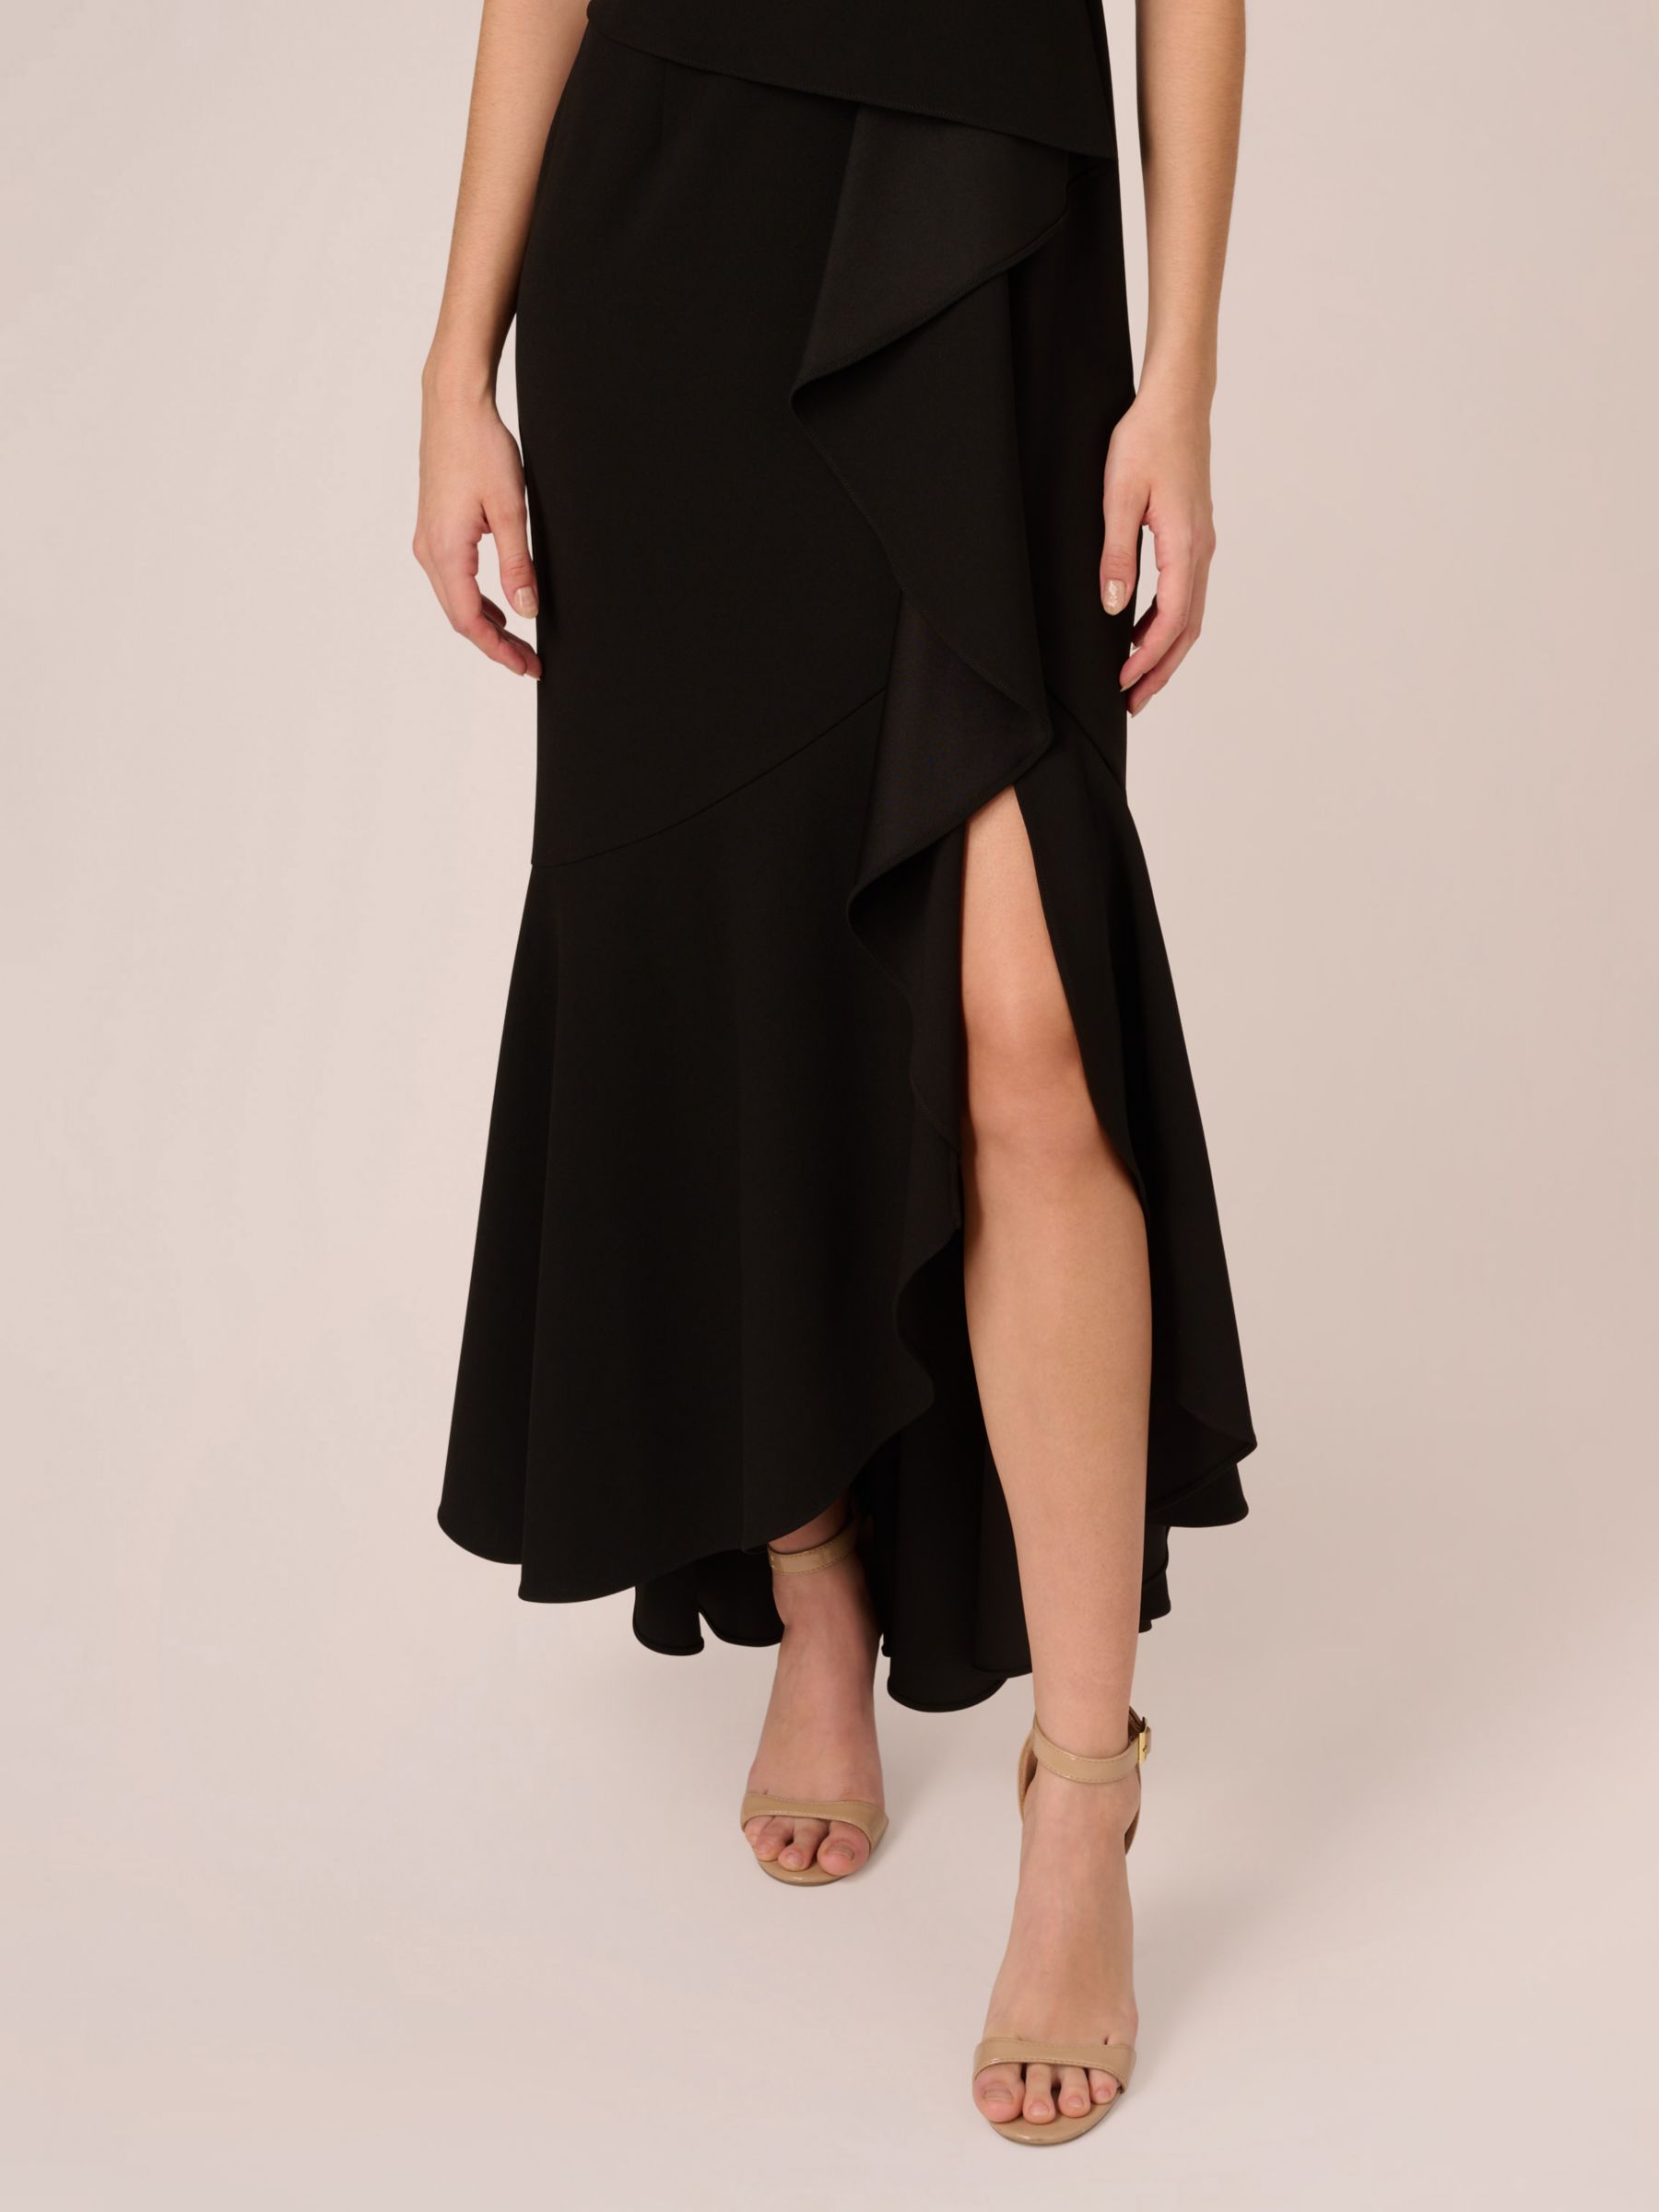 Adrianna Papell Studio Beaded Knit Crepe Maxi Dress, Black, 6